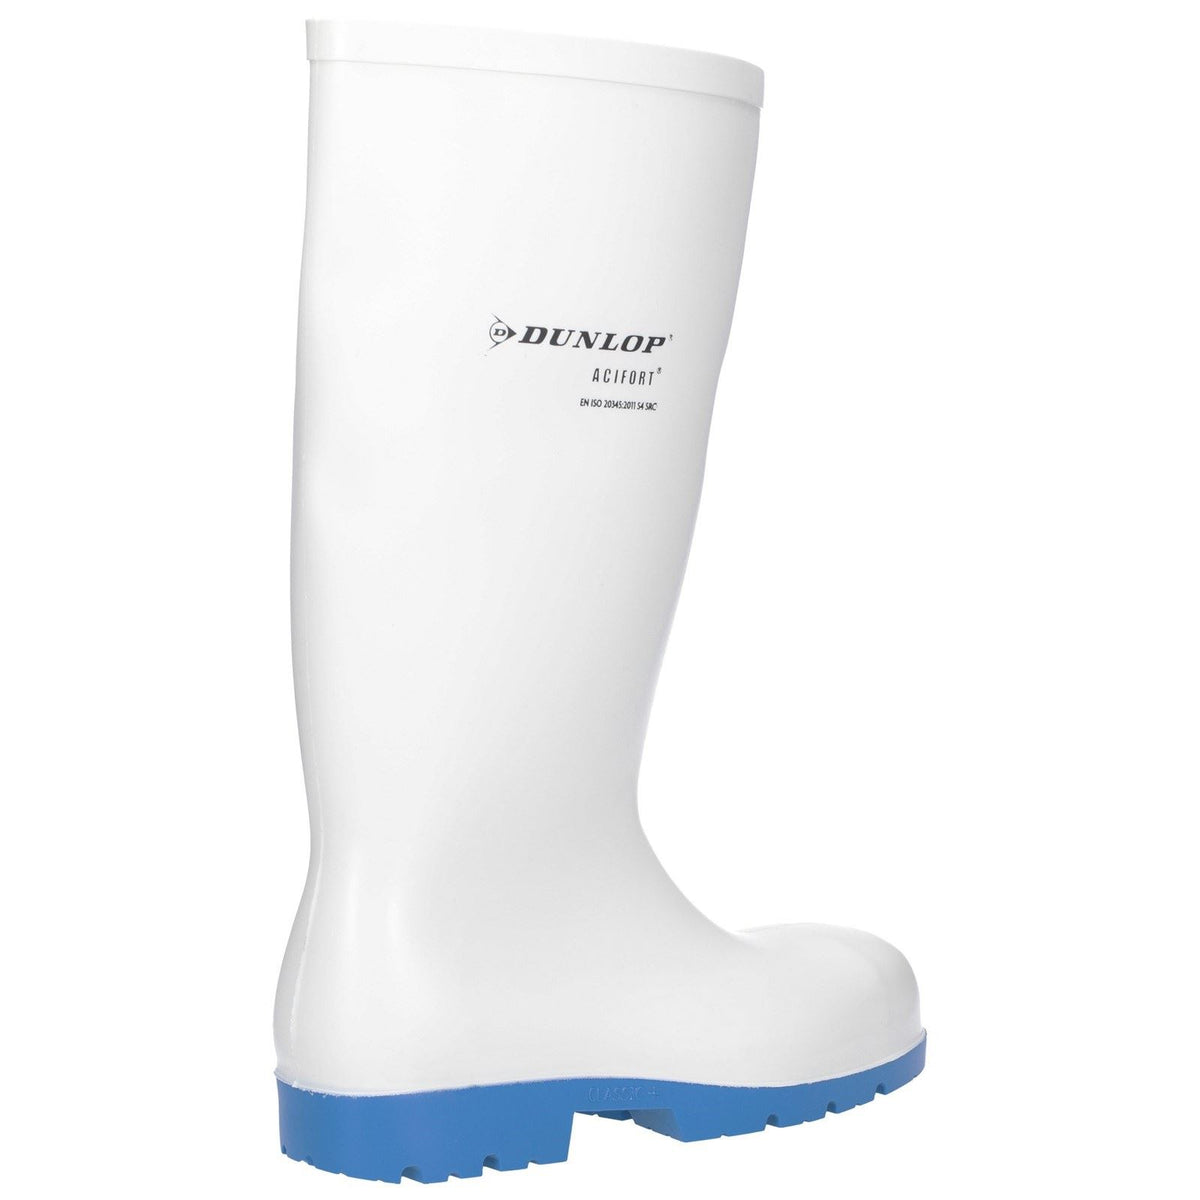 Dunlop Acifort Classic+ Waterproof Safety Wellington